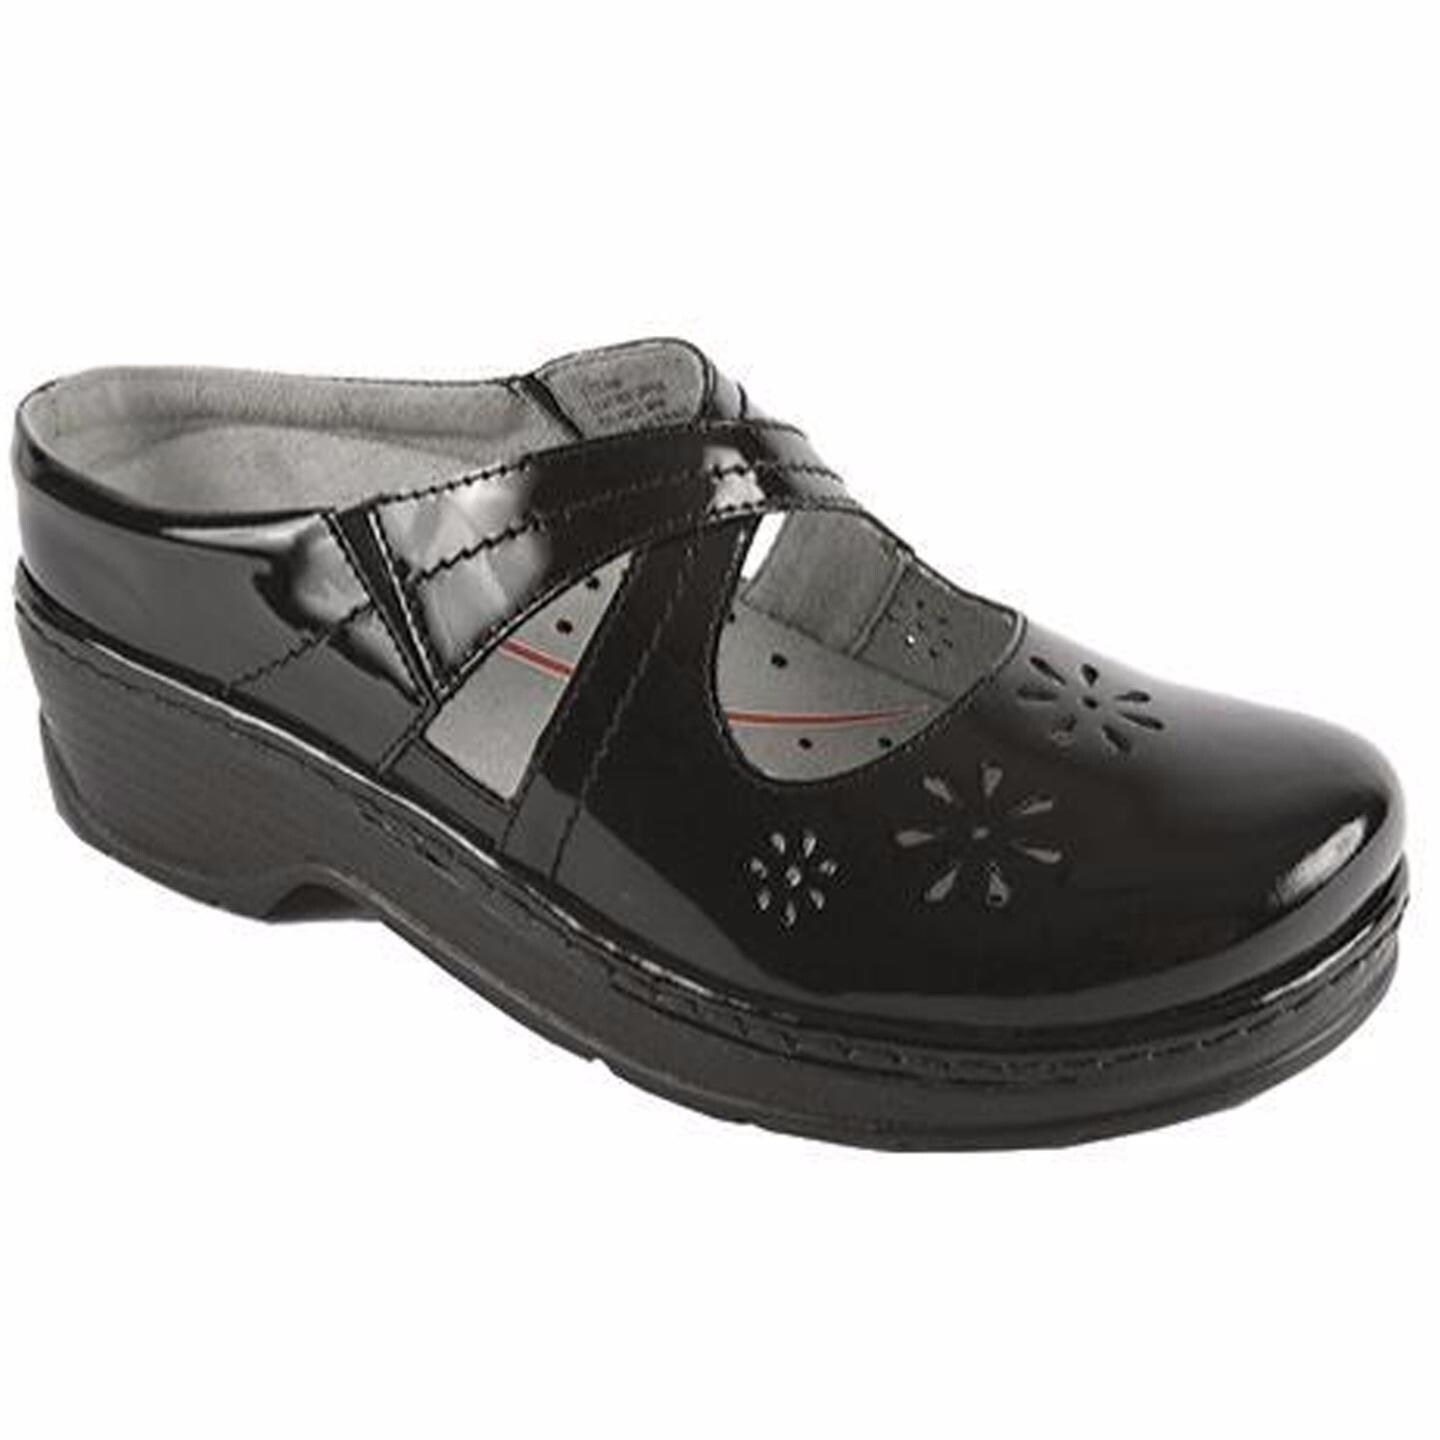 Klogs Carolina Women's Clog Shoes Black 